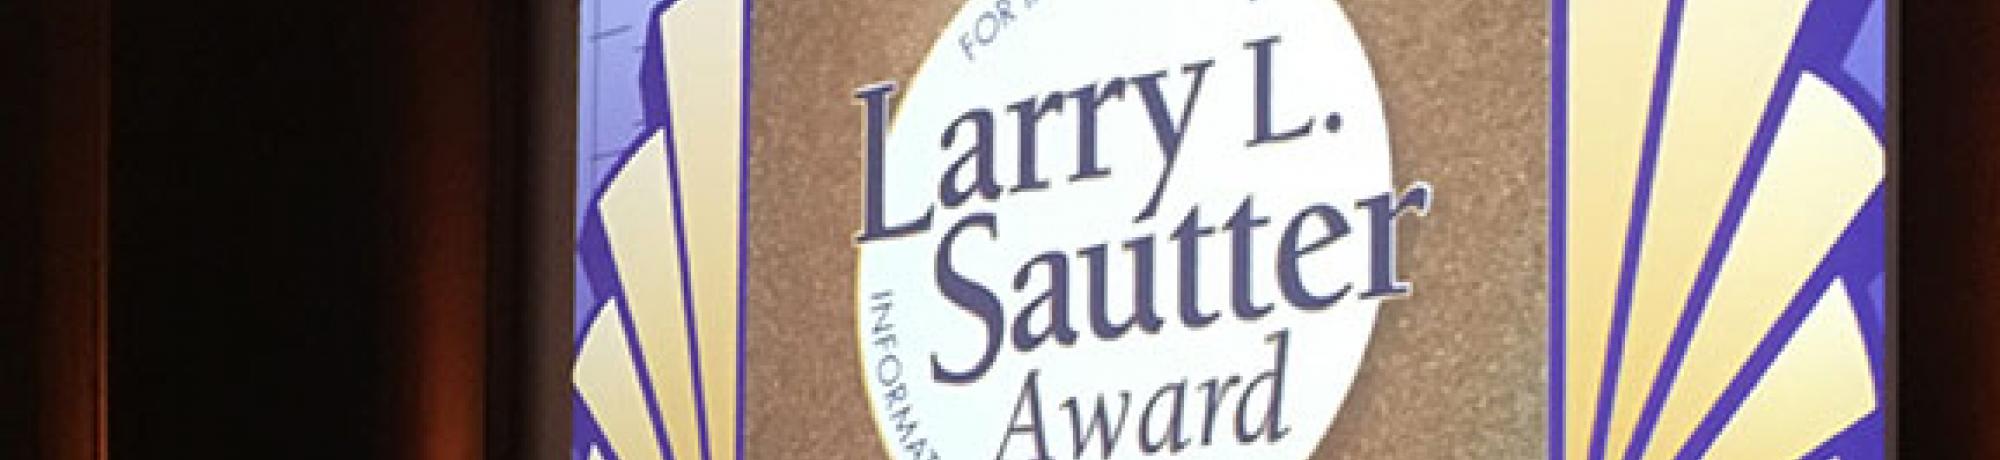 Larry Sautter Awards 